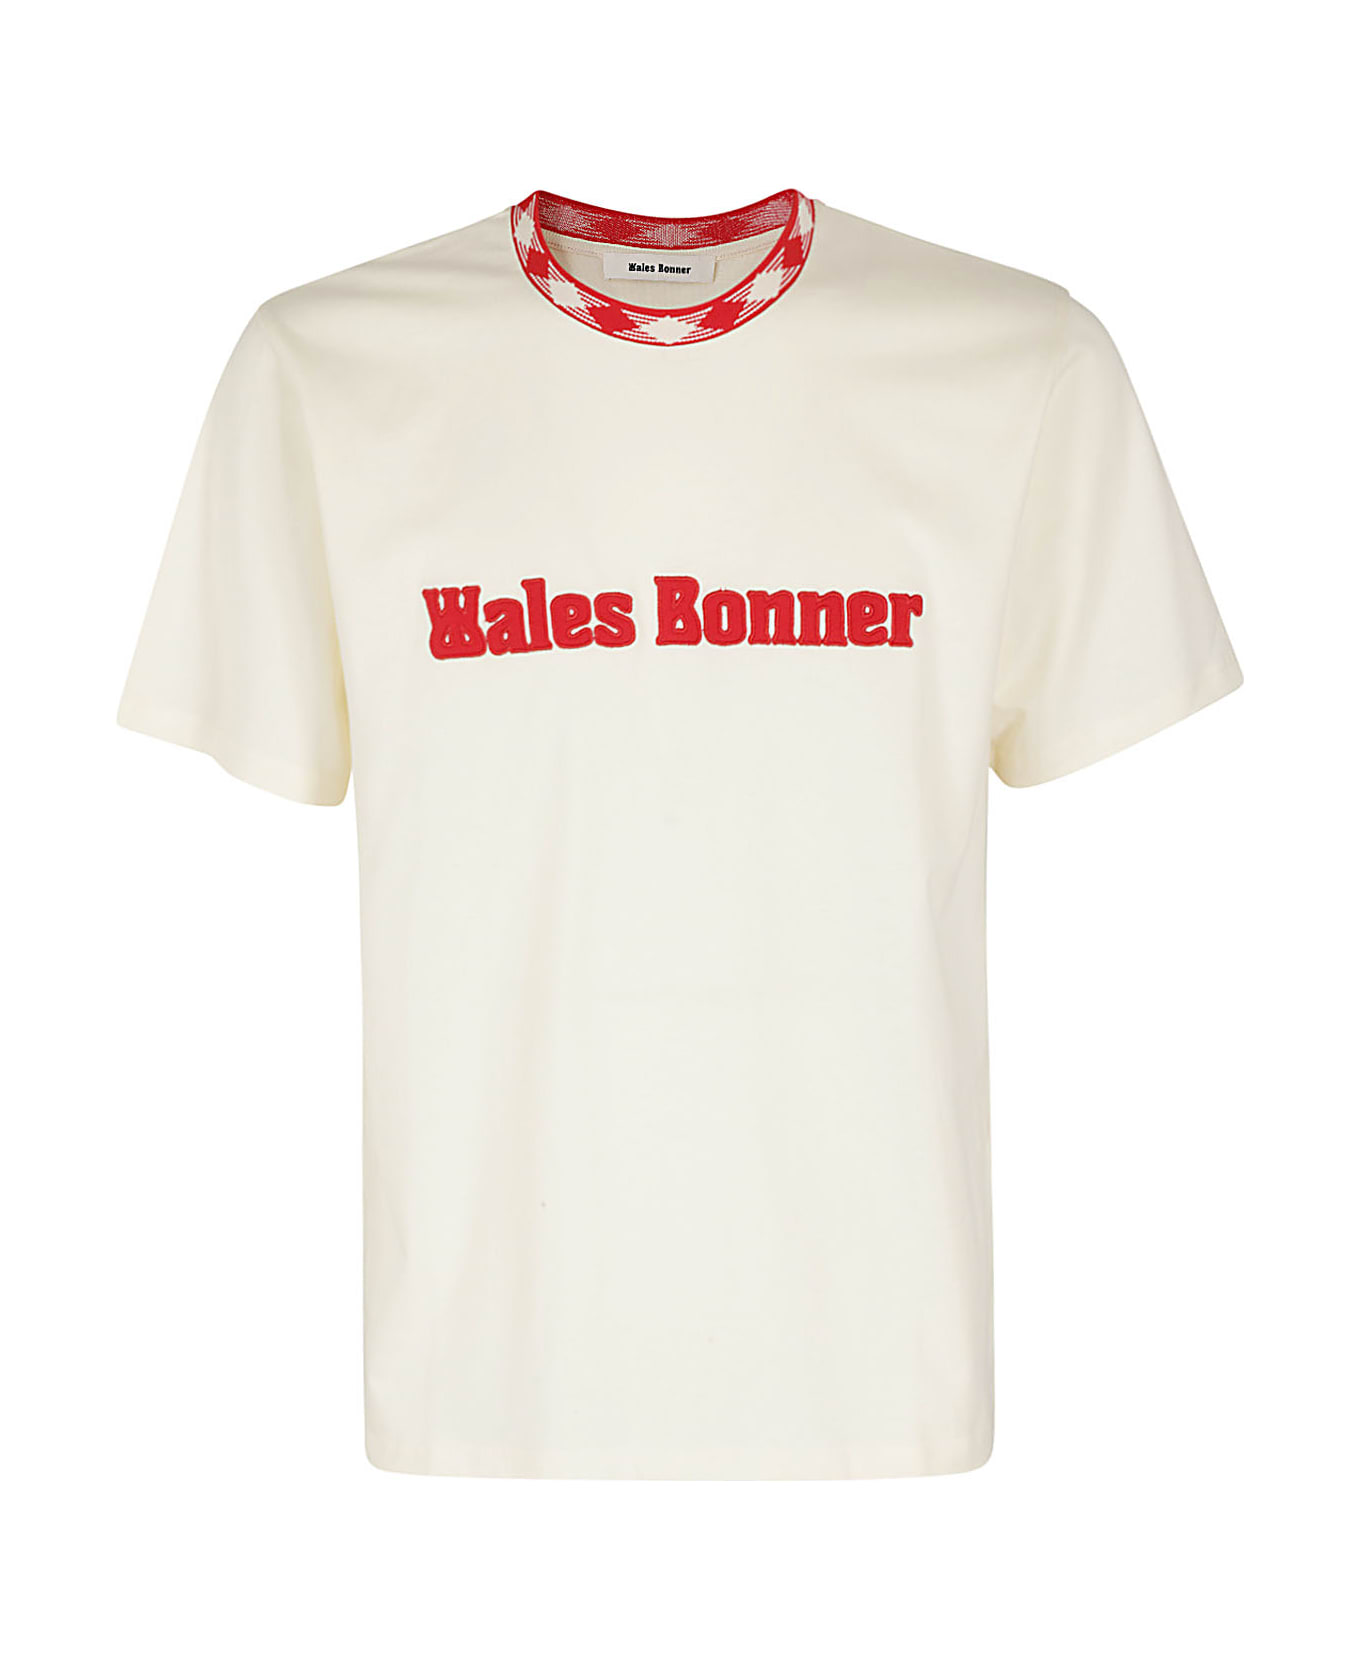 Wales Bonner Original Tee - Ivory